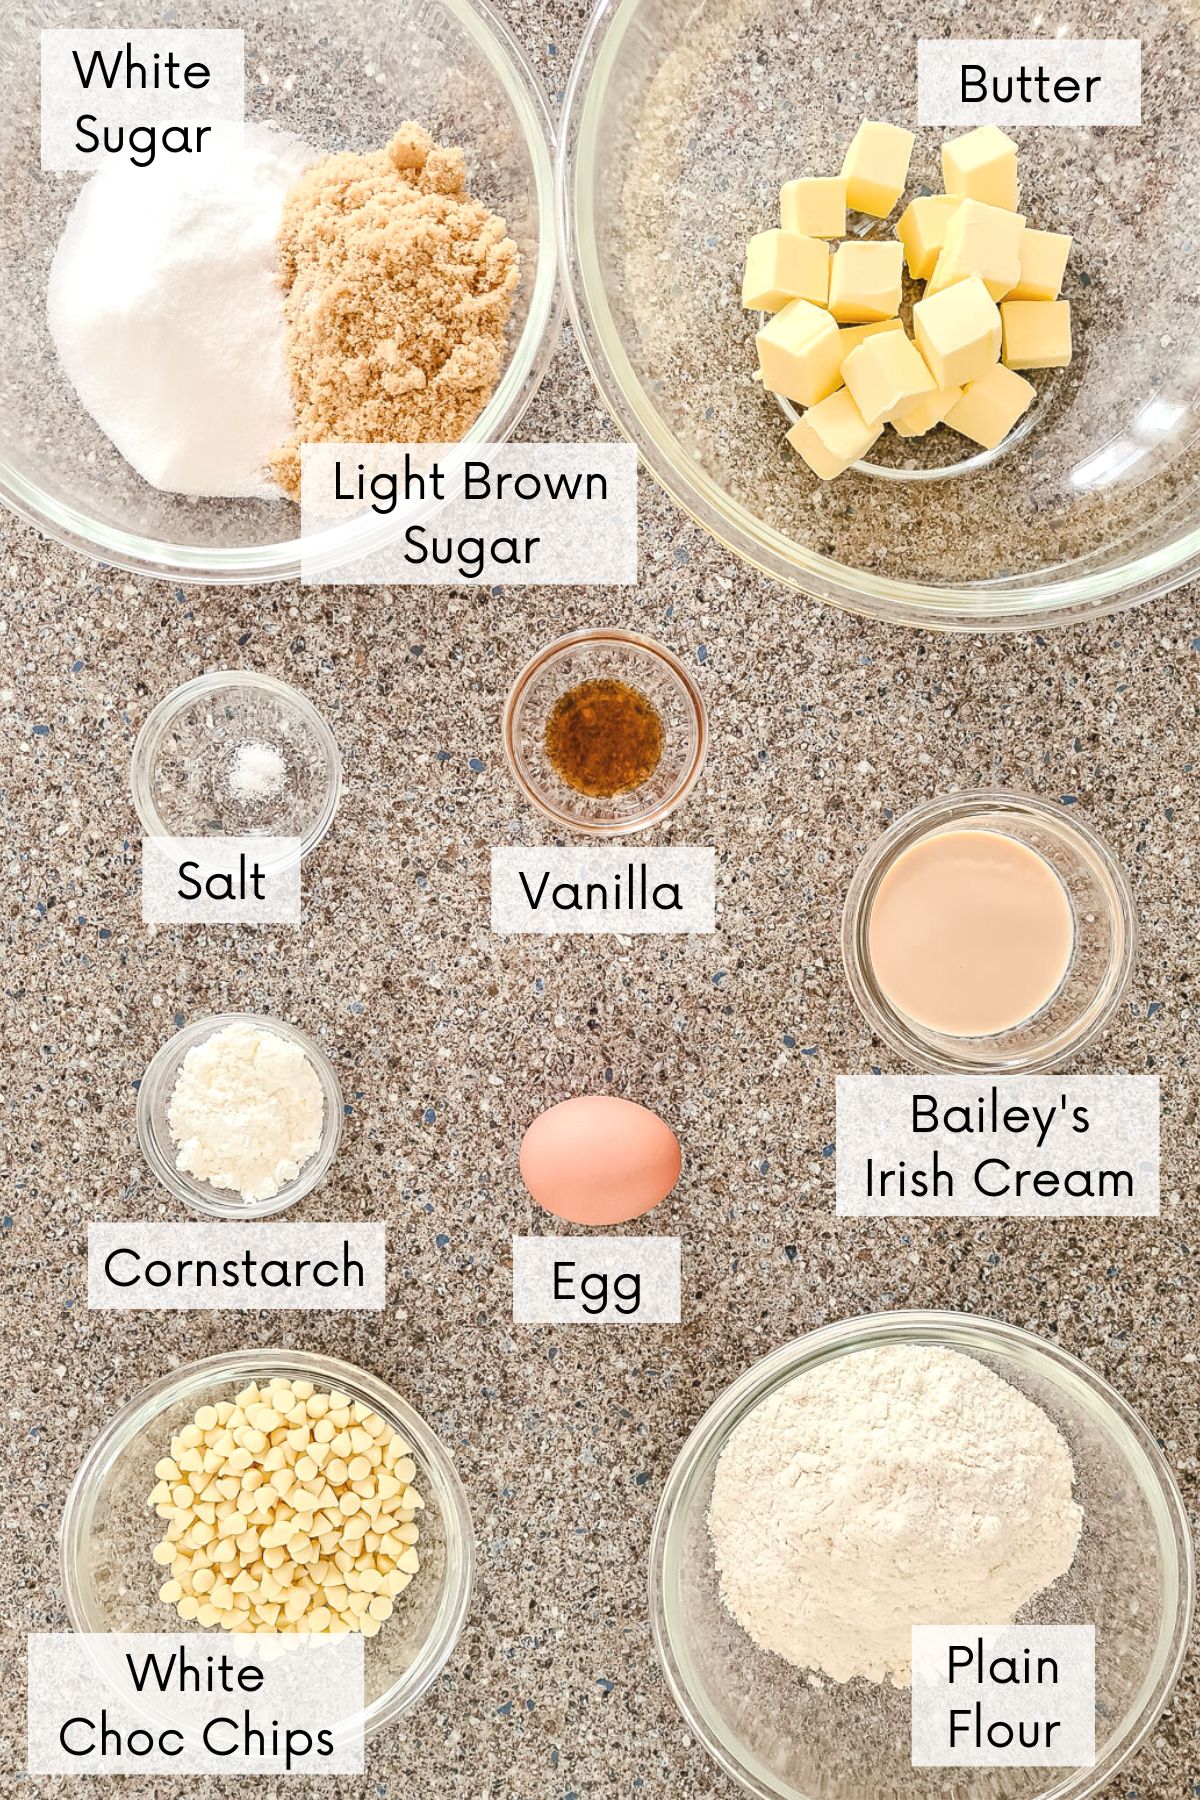 baileys irish cream white chocolate chips blondies recipe ingredients in bowls with labels.